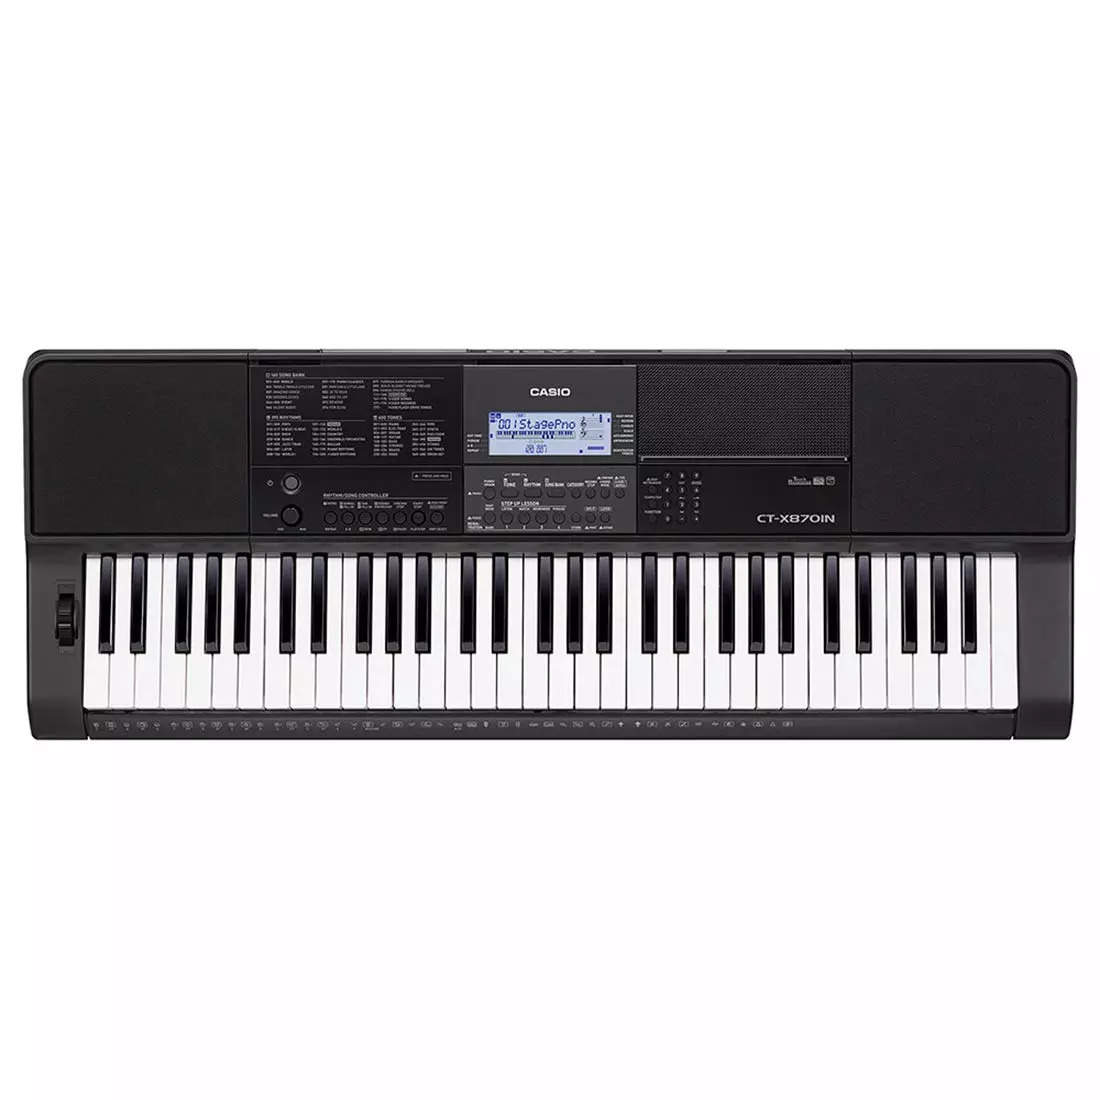 Best Casio Keyboard for beginners: 5 Best Casio Portable Musical